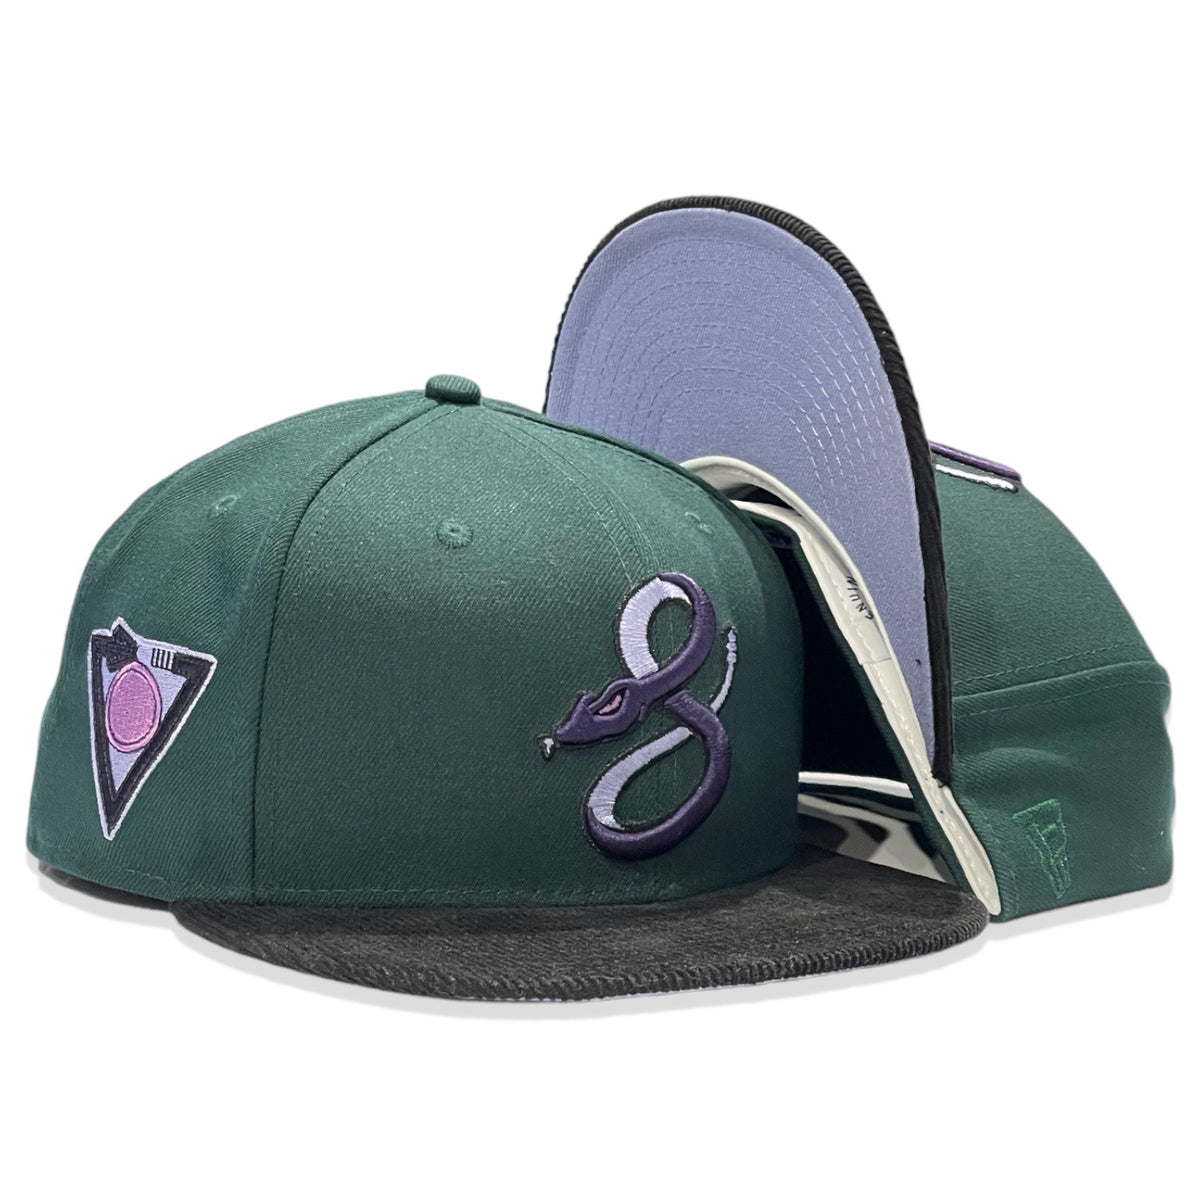 Arizona Diamondbacks City Connect hat by Prociety. Clean hat. Love